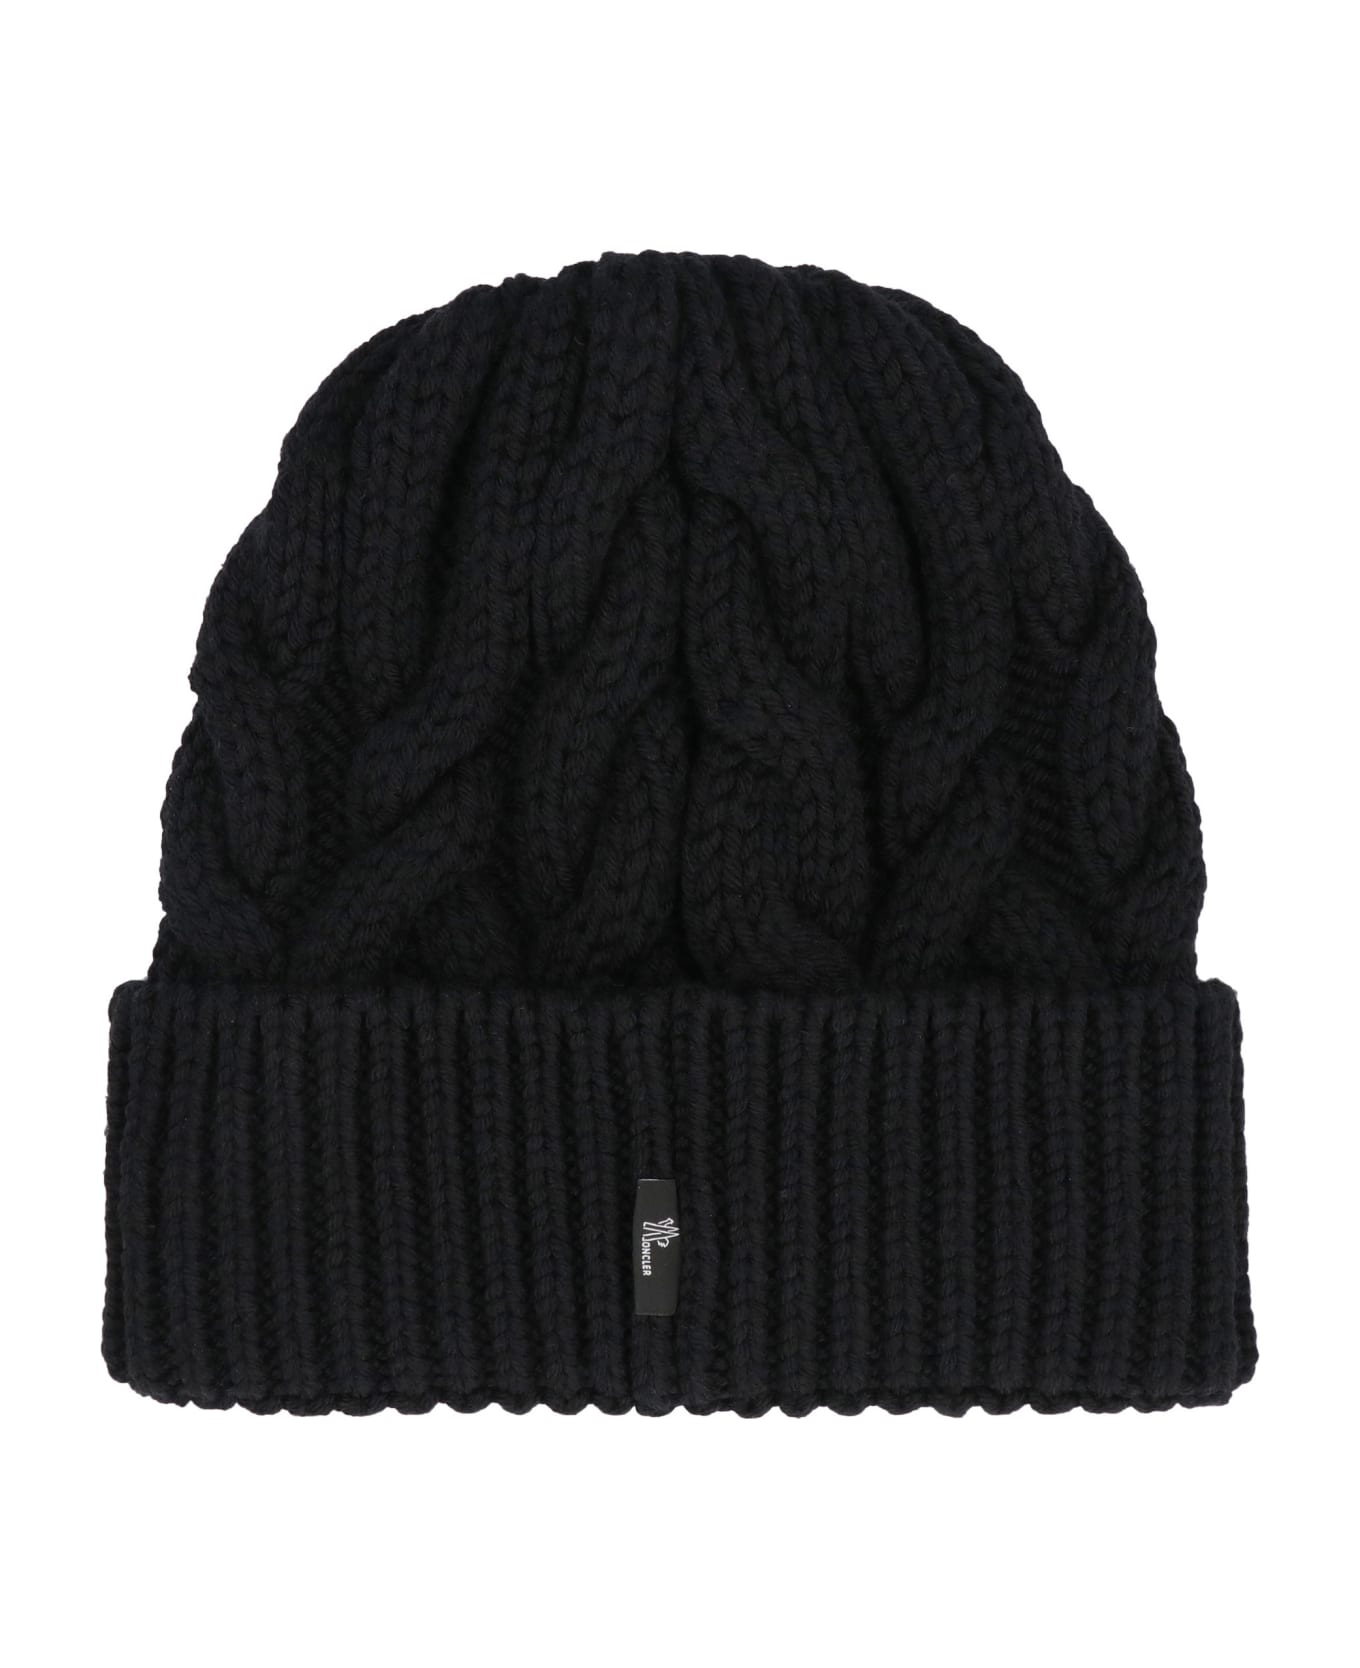 Moncler Grenoble Wool Hat - Black